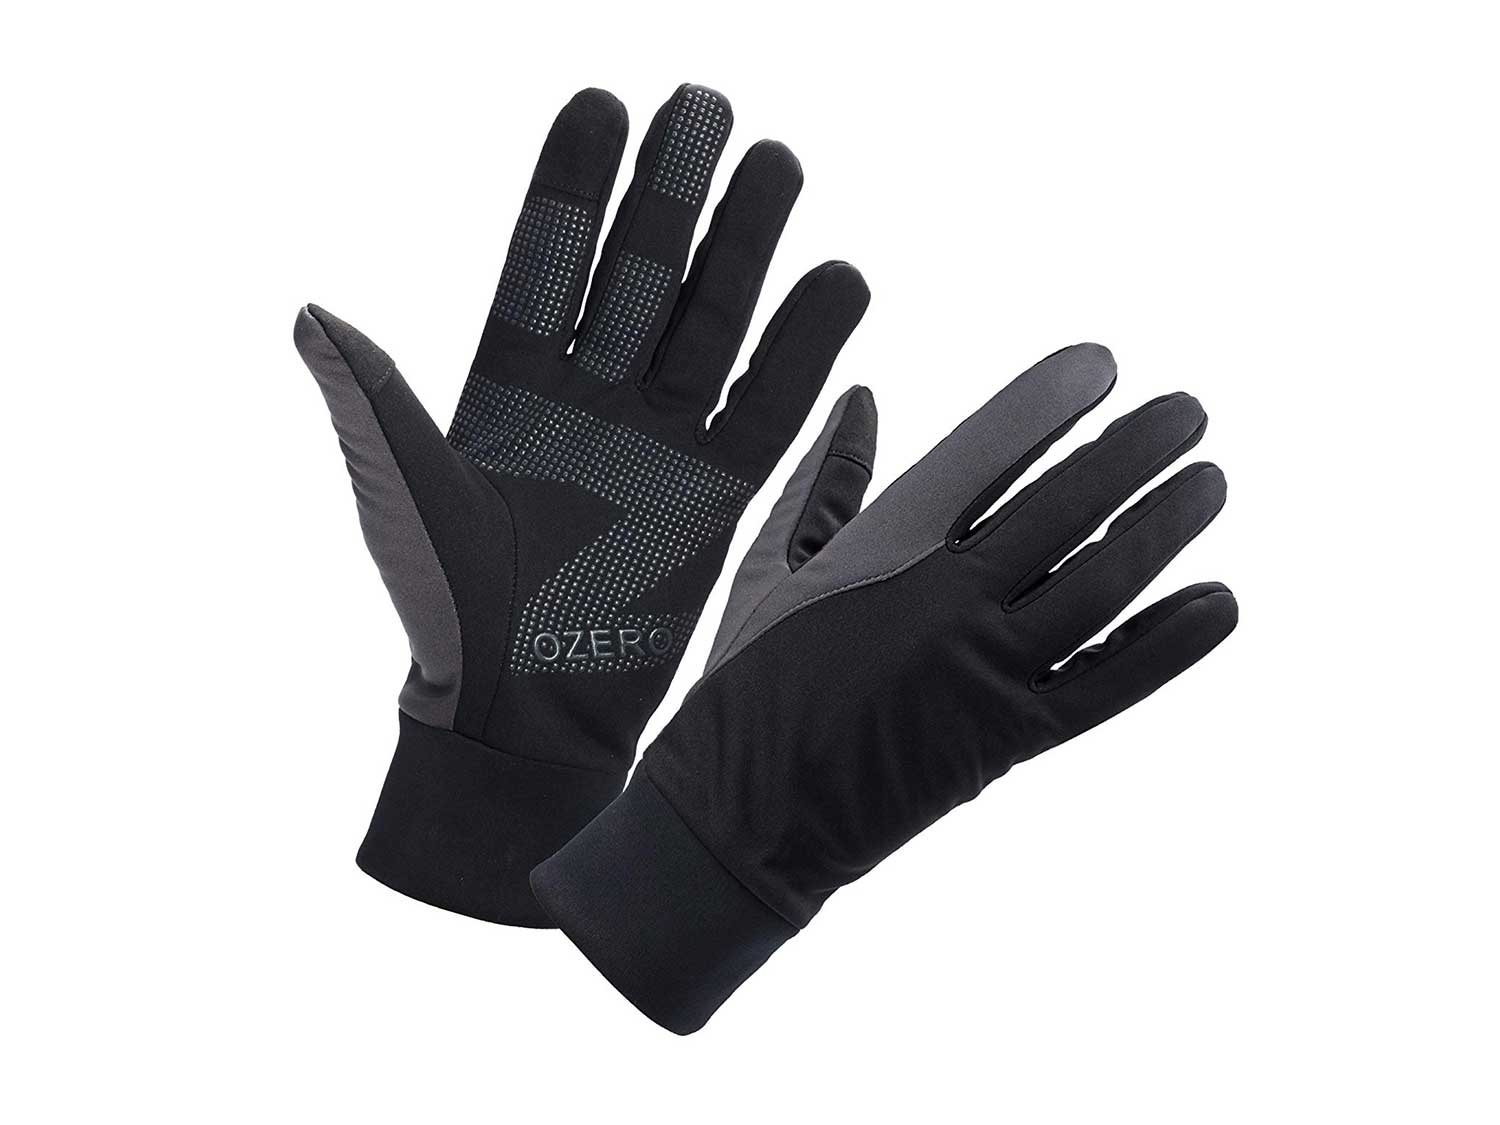 Ozero Men’s Winter Thermal Gloves